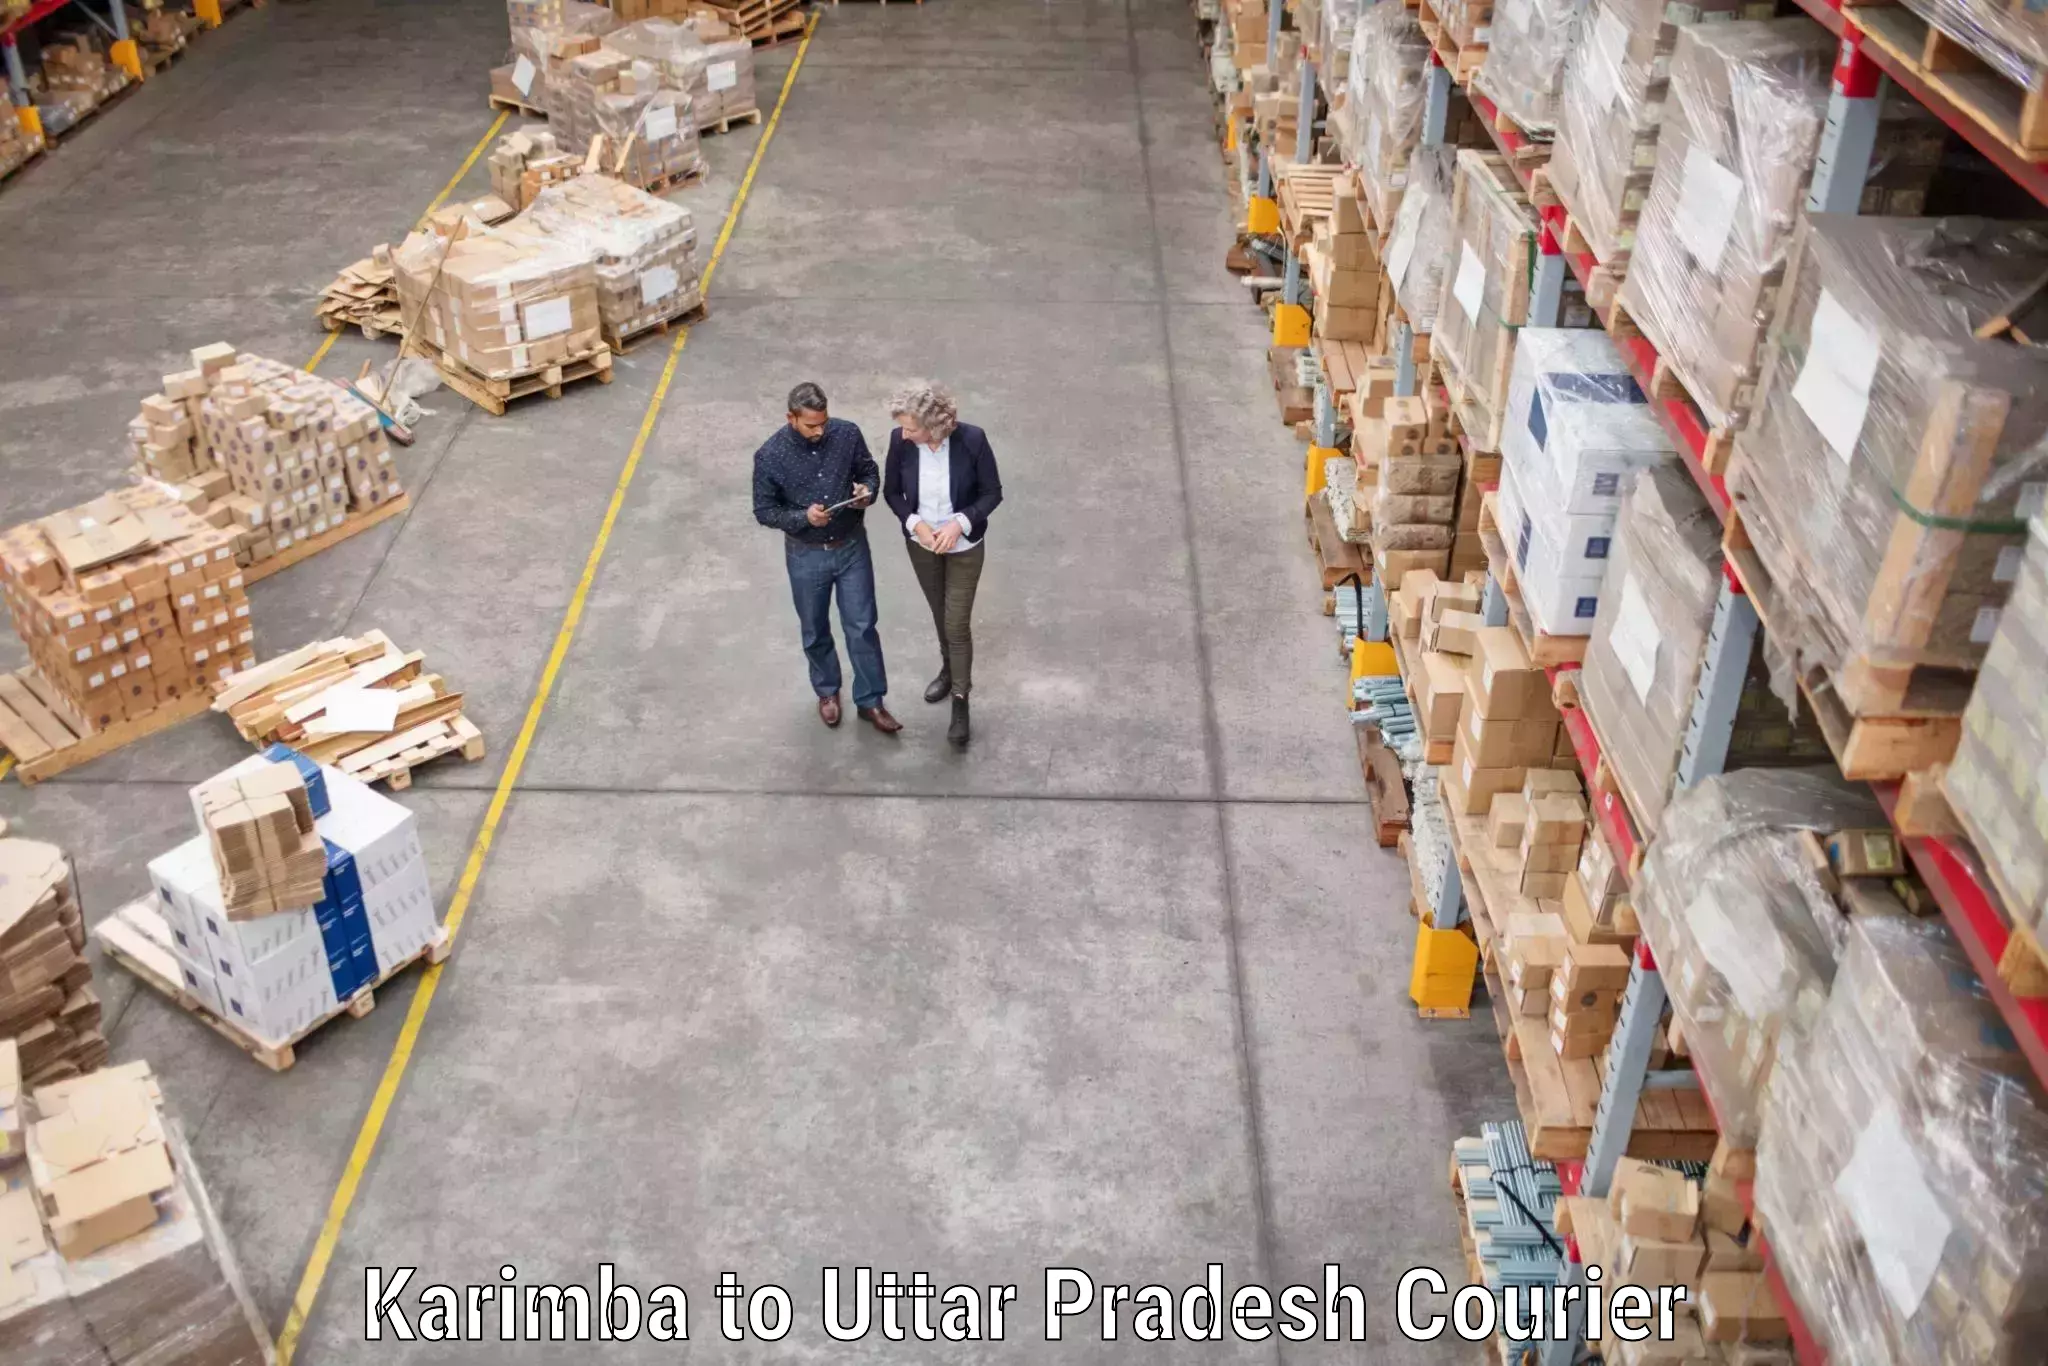 Professional movers and packers Karimba to Uttar Pradesh